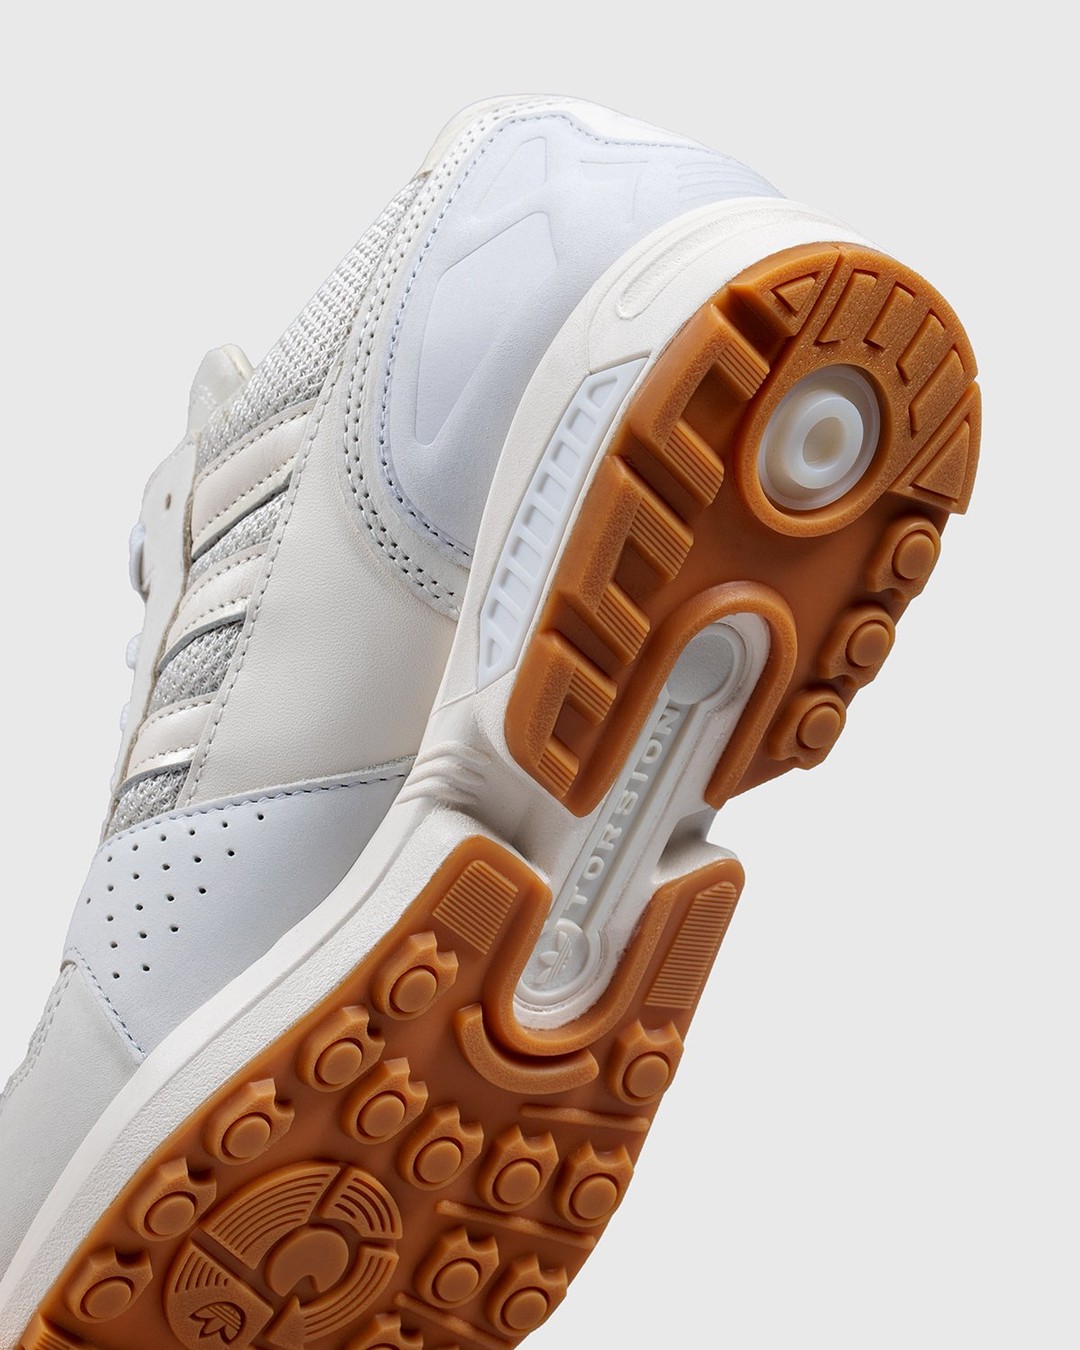 Adidas x Highsnobiety – ZX8000 Qualität Cream White - Low Top Sneakers - White - Image 6